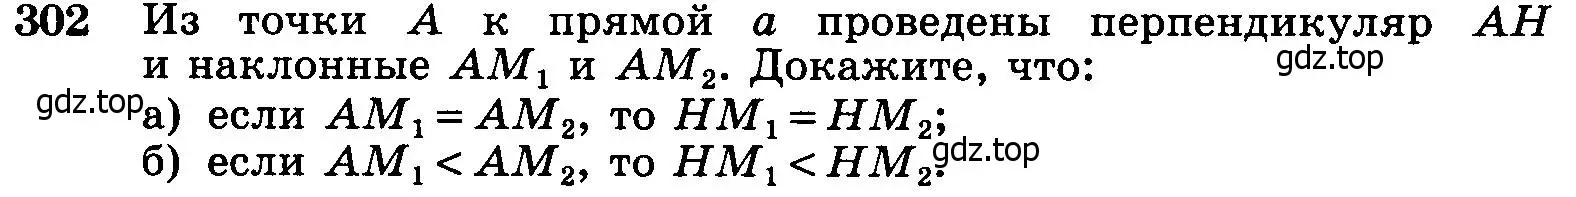 Условие номер 302 (страница 90) гдз по геометрии 7-9 класс Атанасян, Бутузов, учебник